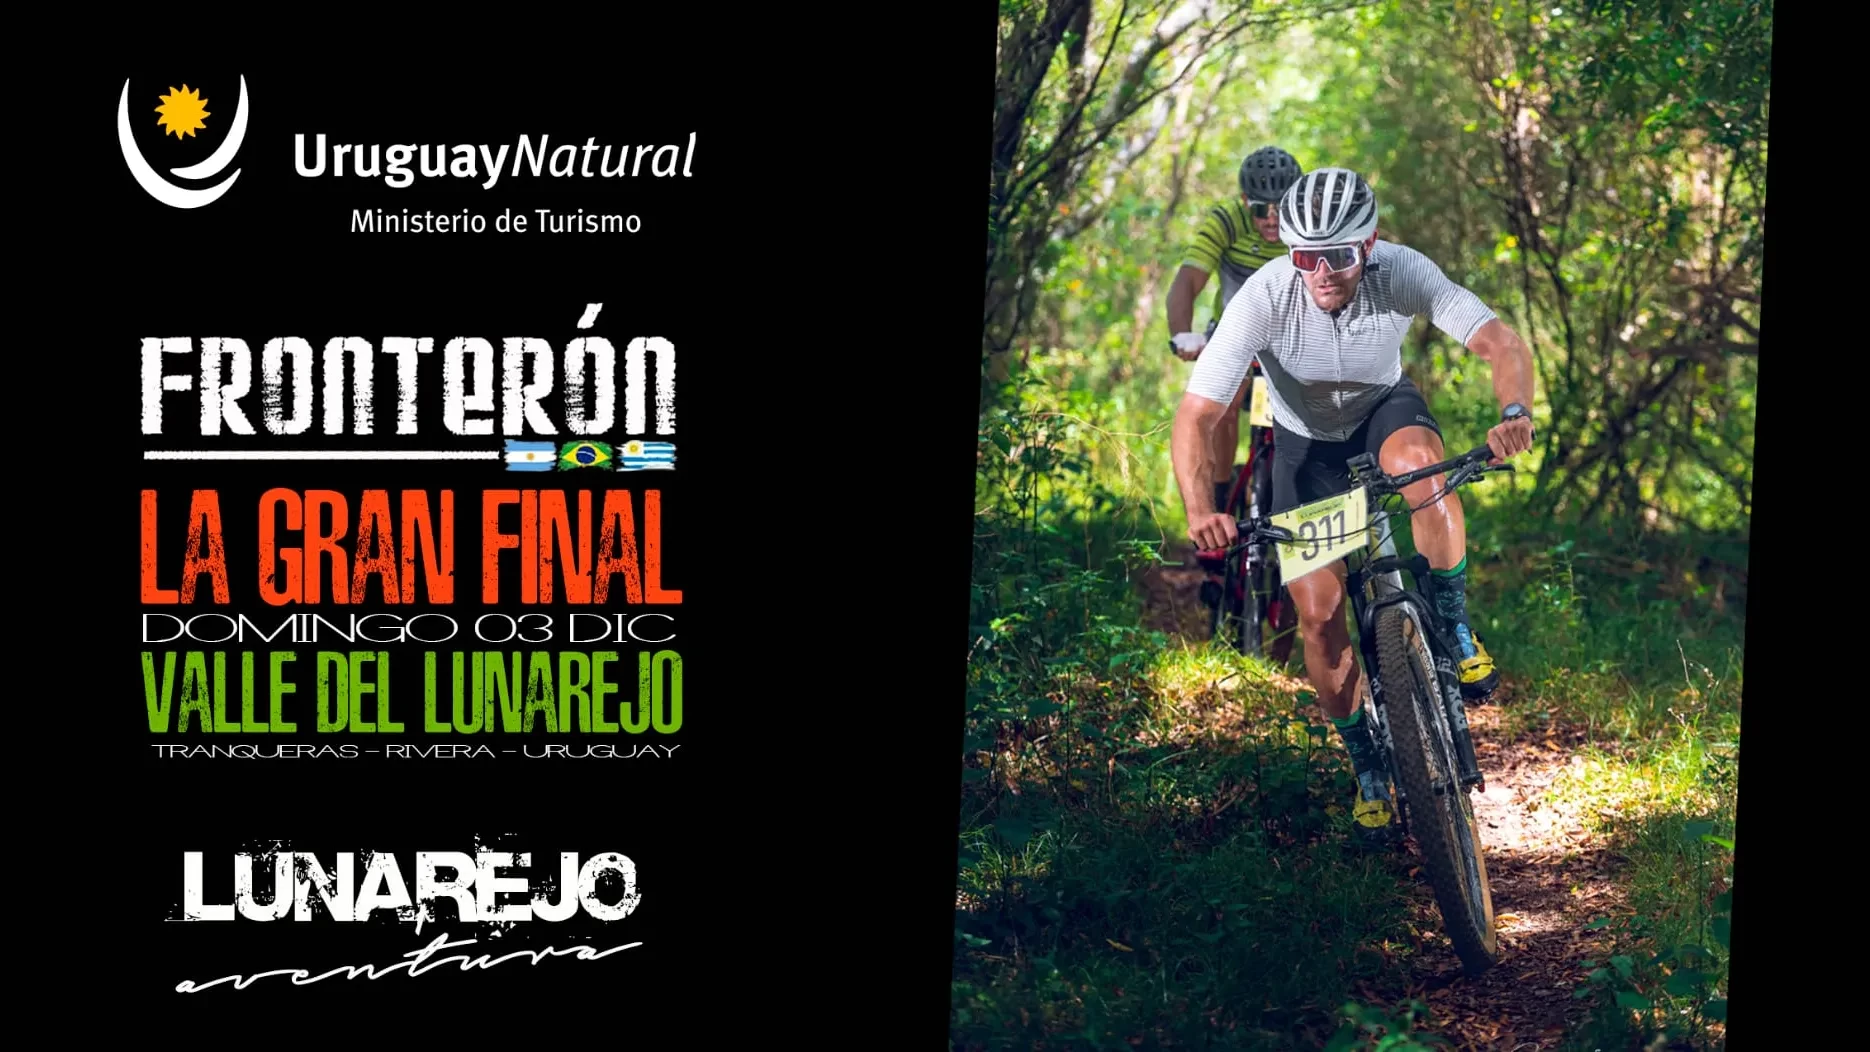 Final del Fronterón, Campeonato de Mountain Bike